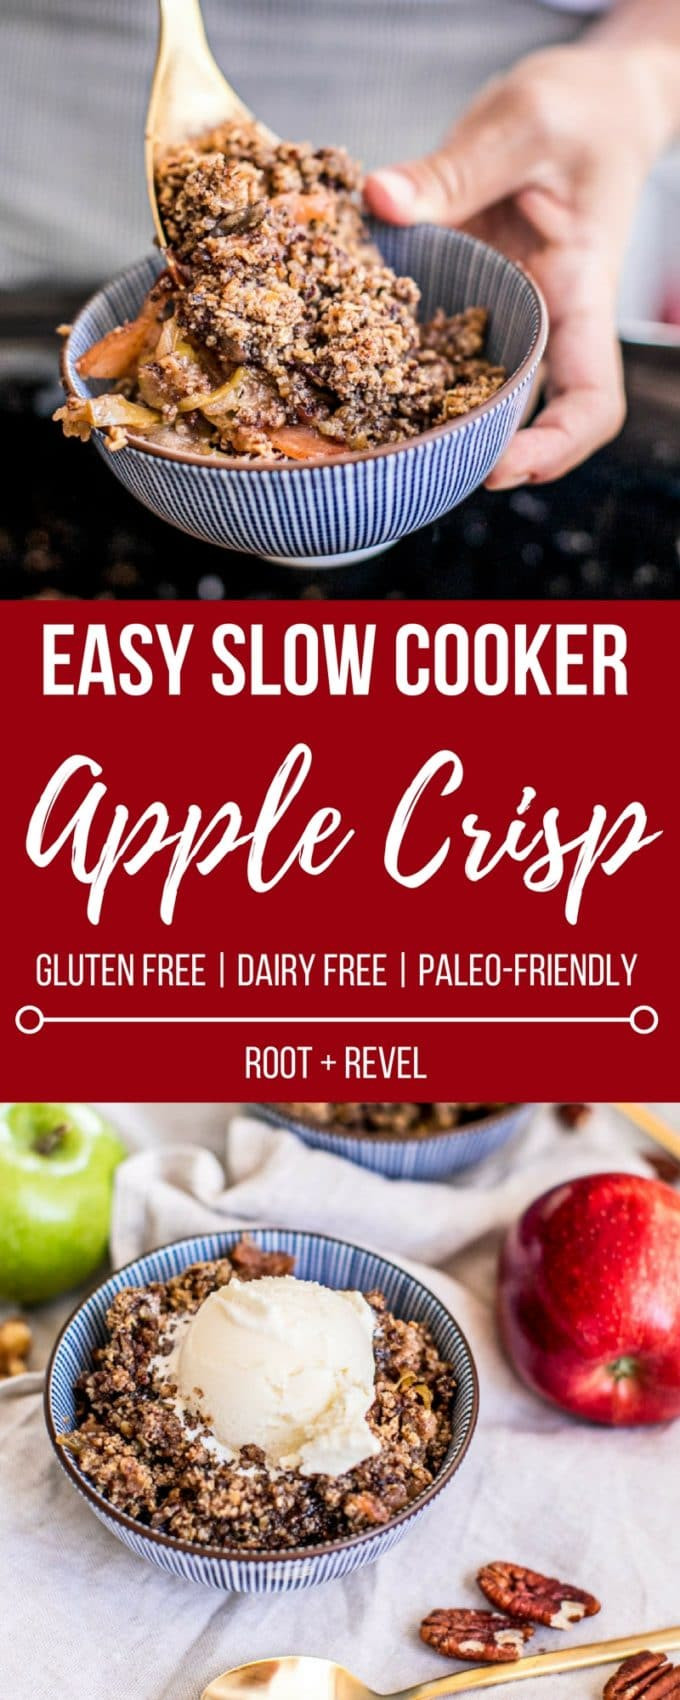 Slow Cooker Apple Recipes Healthy
 Easy Slow Cooker Apple Crisp Recipe Gluten Free